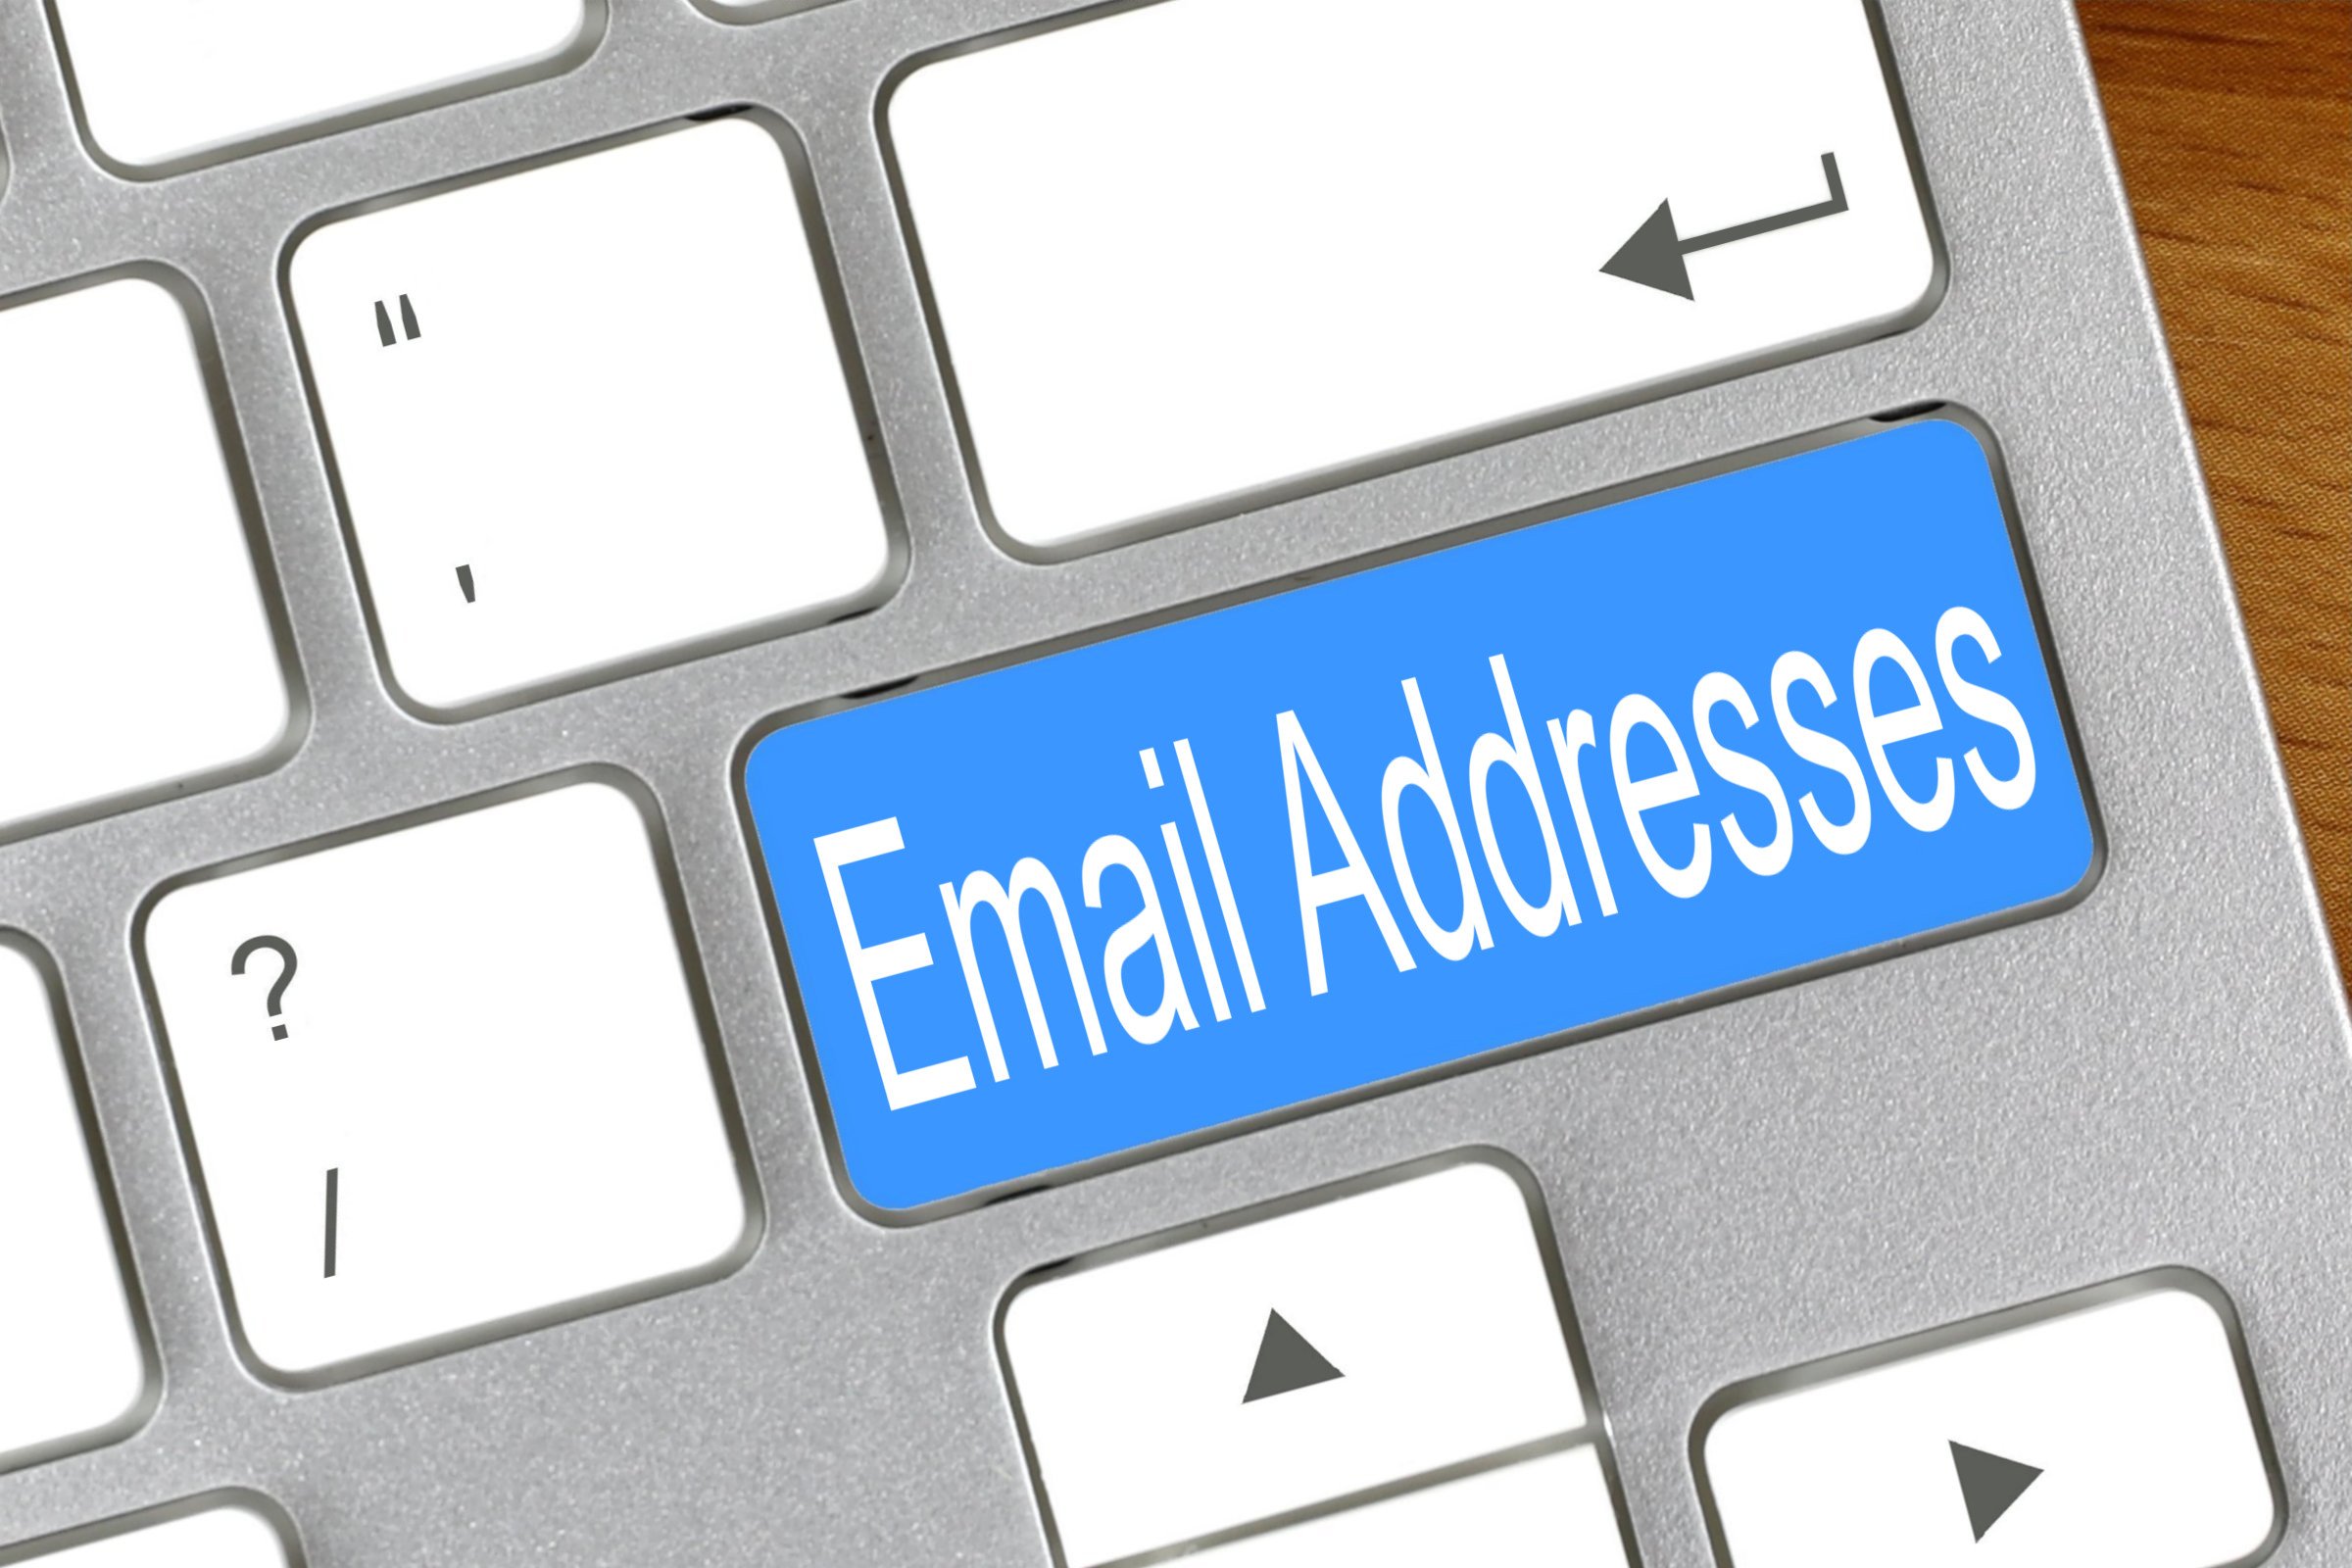 email addresses